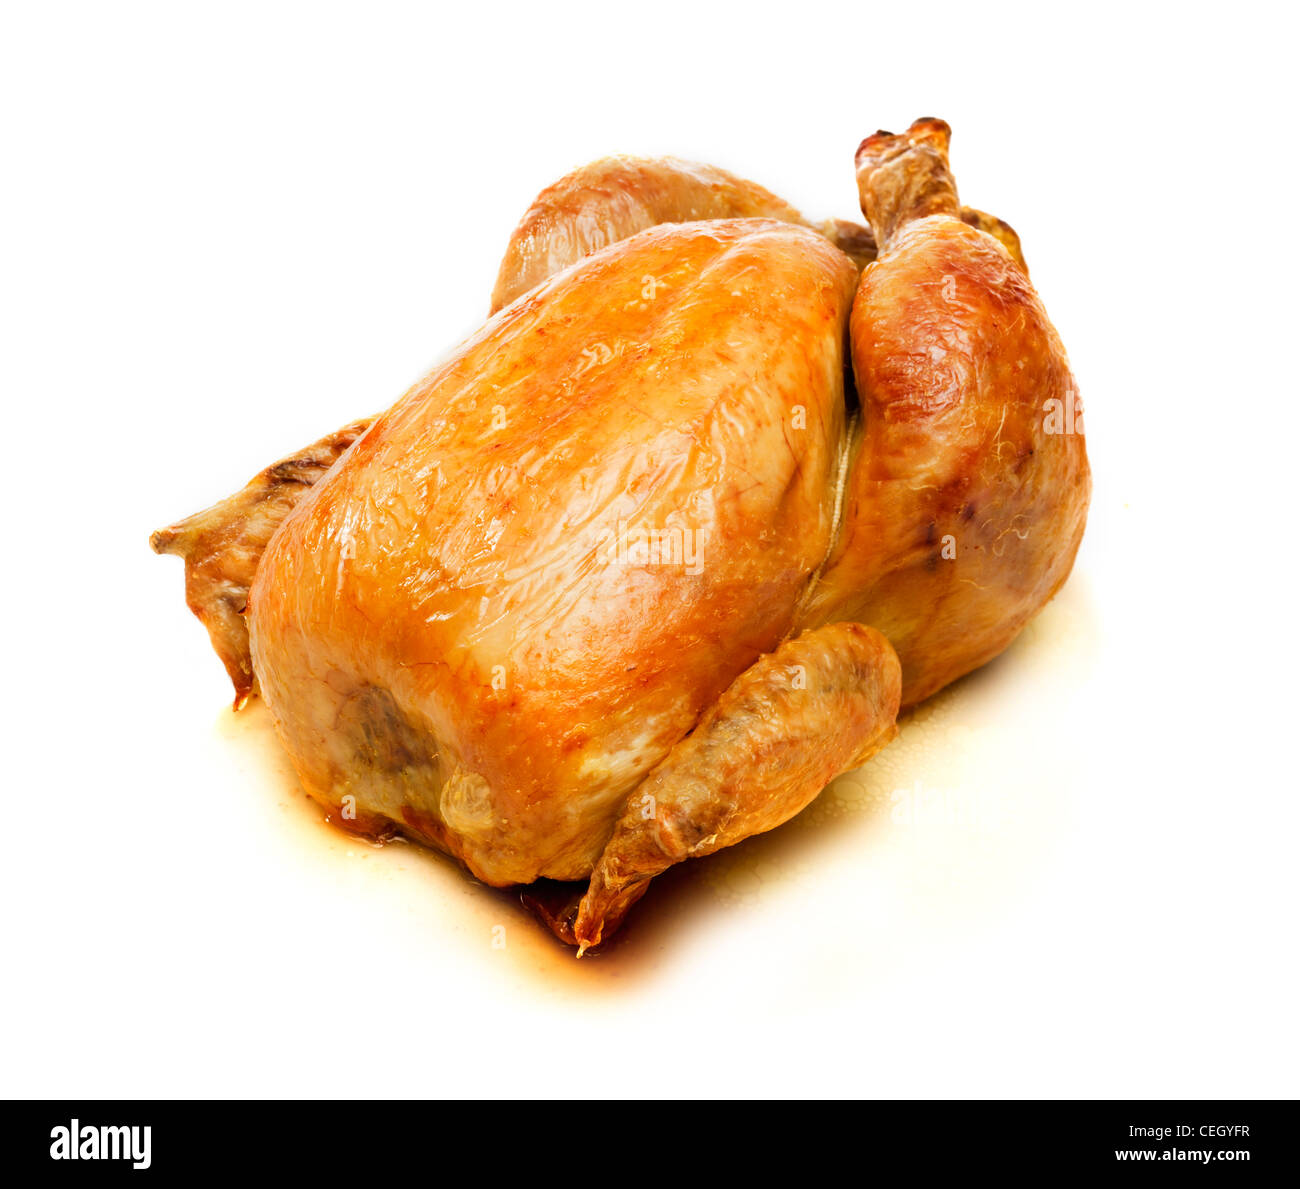 Roast chicken on white background Stock Photo